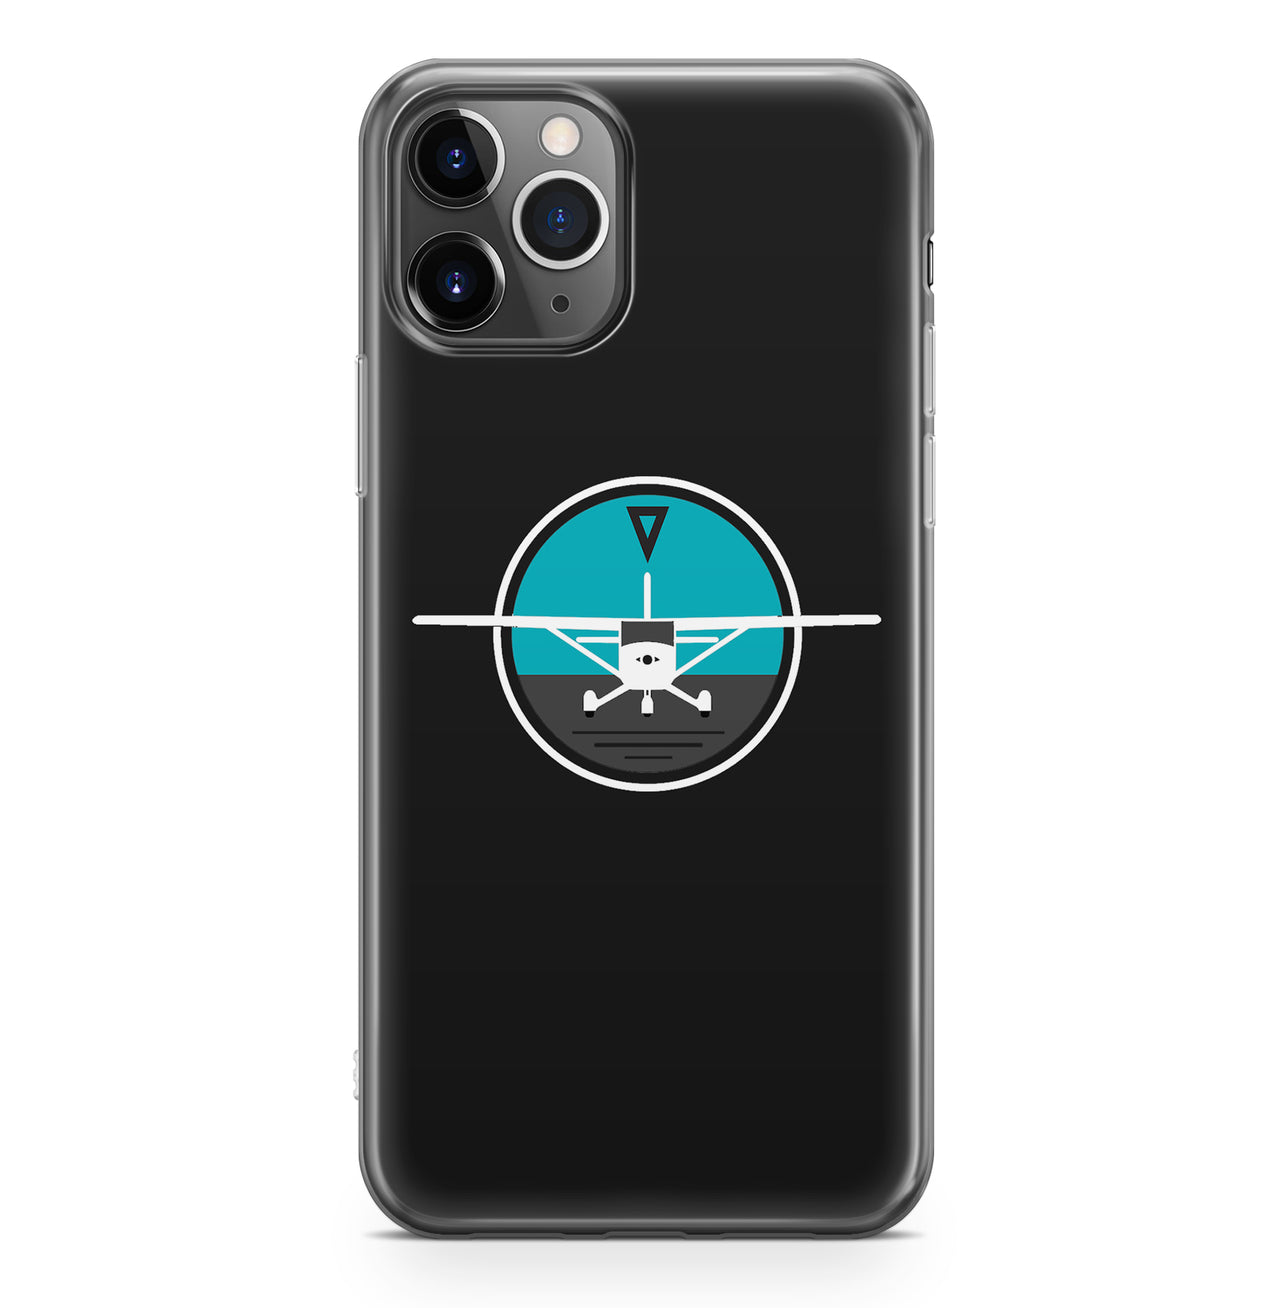 Cessna & Gyro Designed iPhone Cases